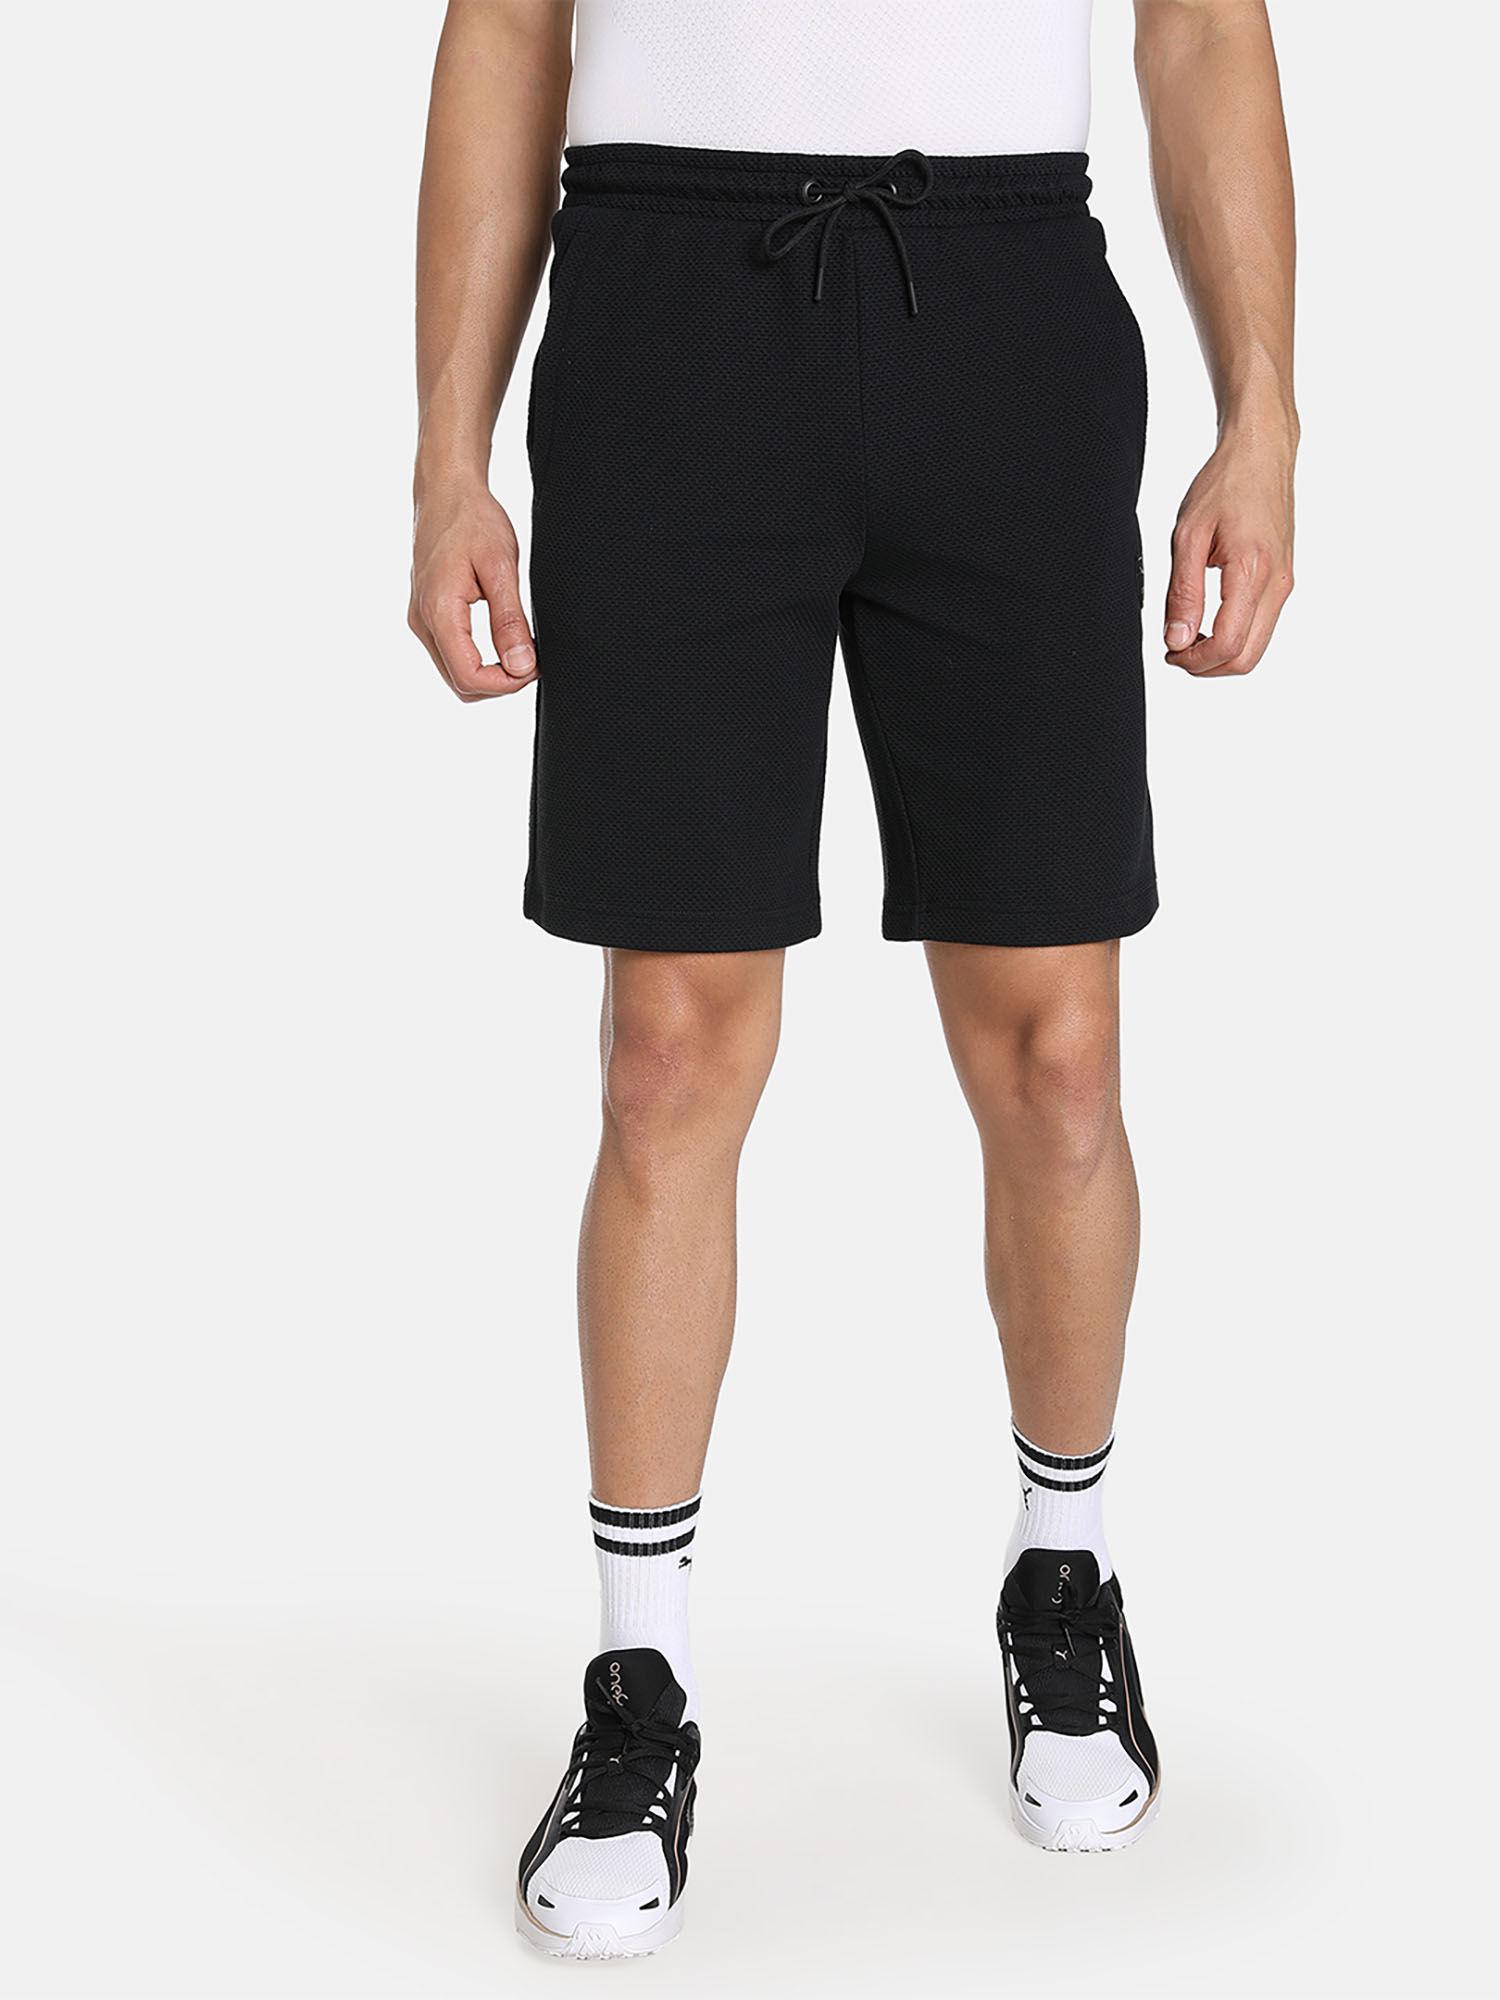 x-one8-sweat-men's-black-shorts